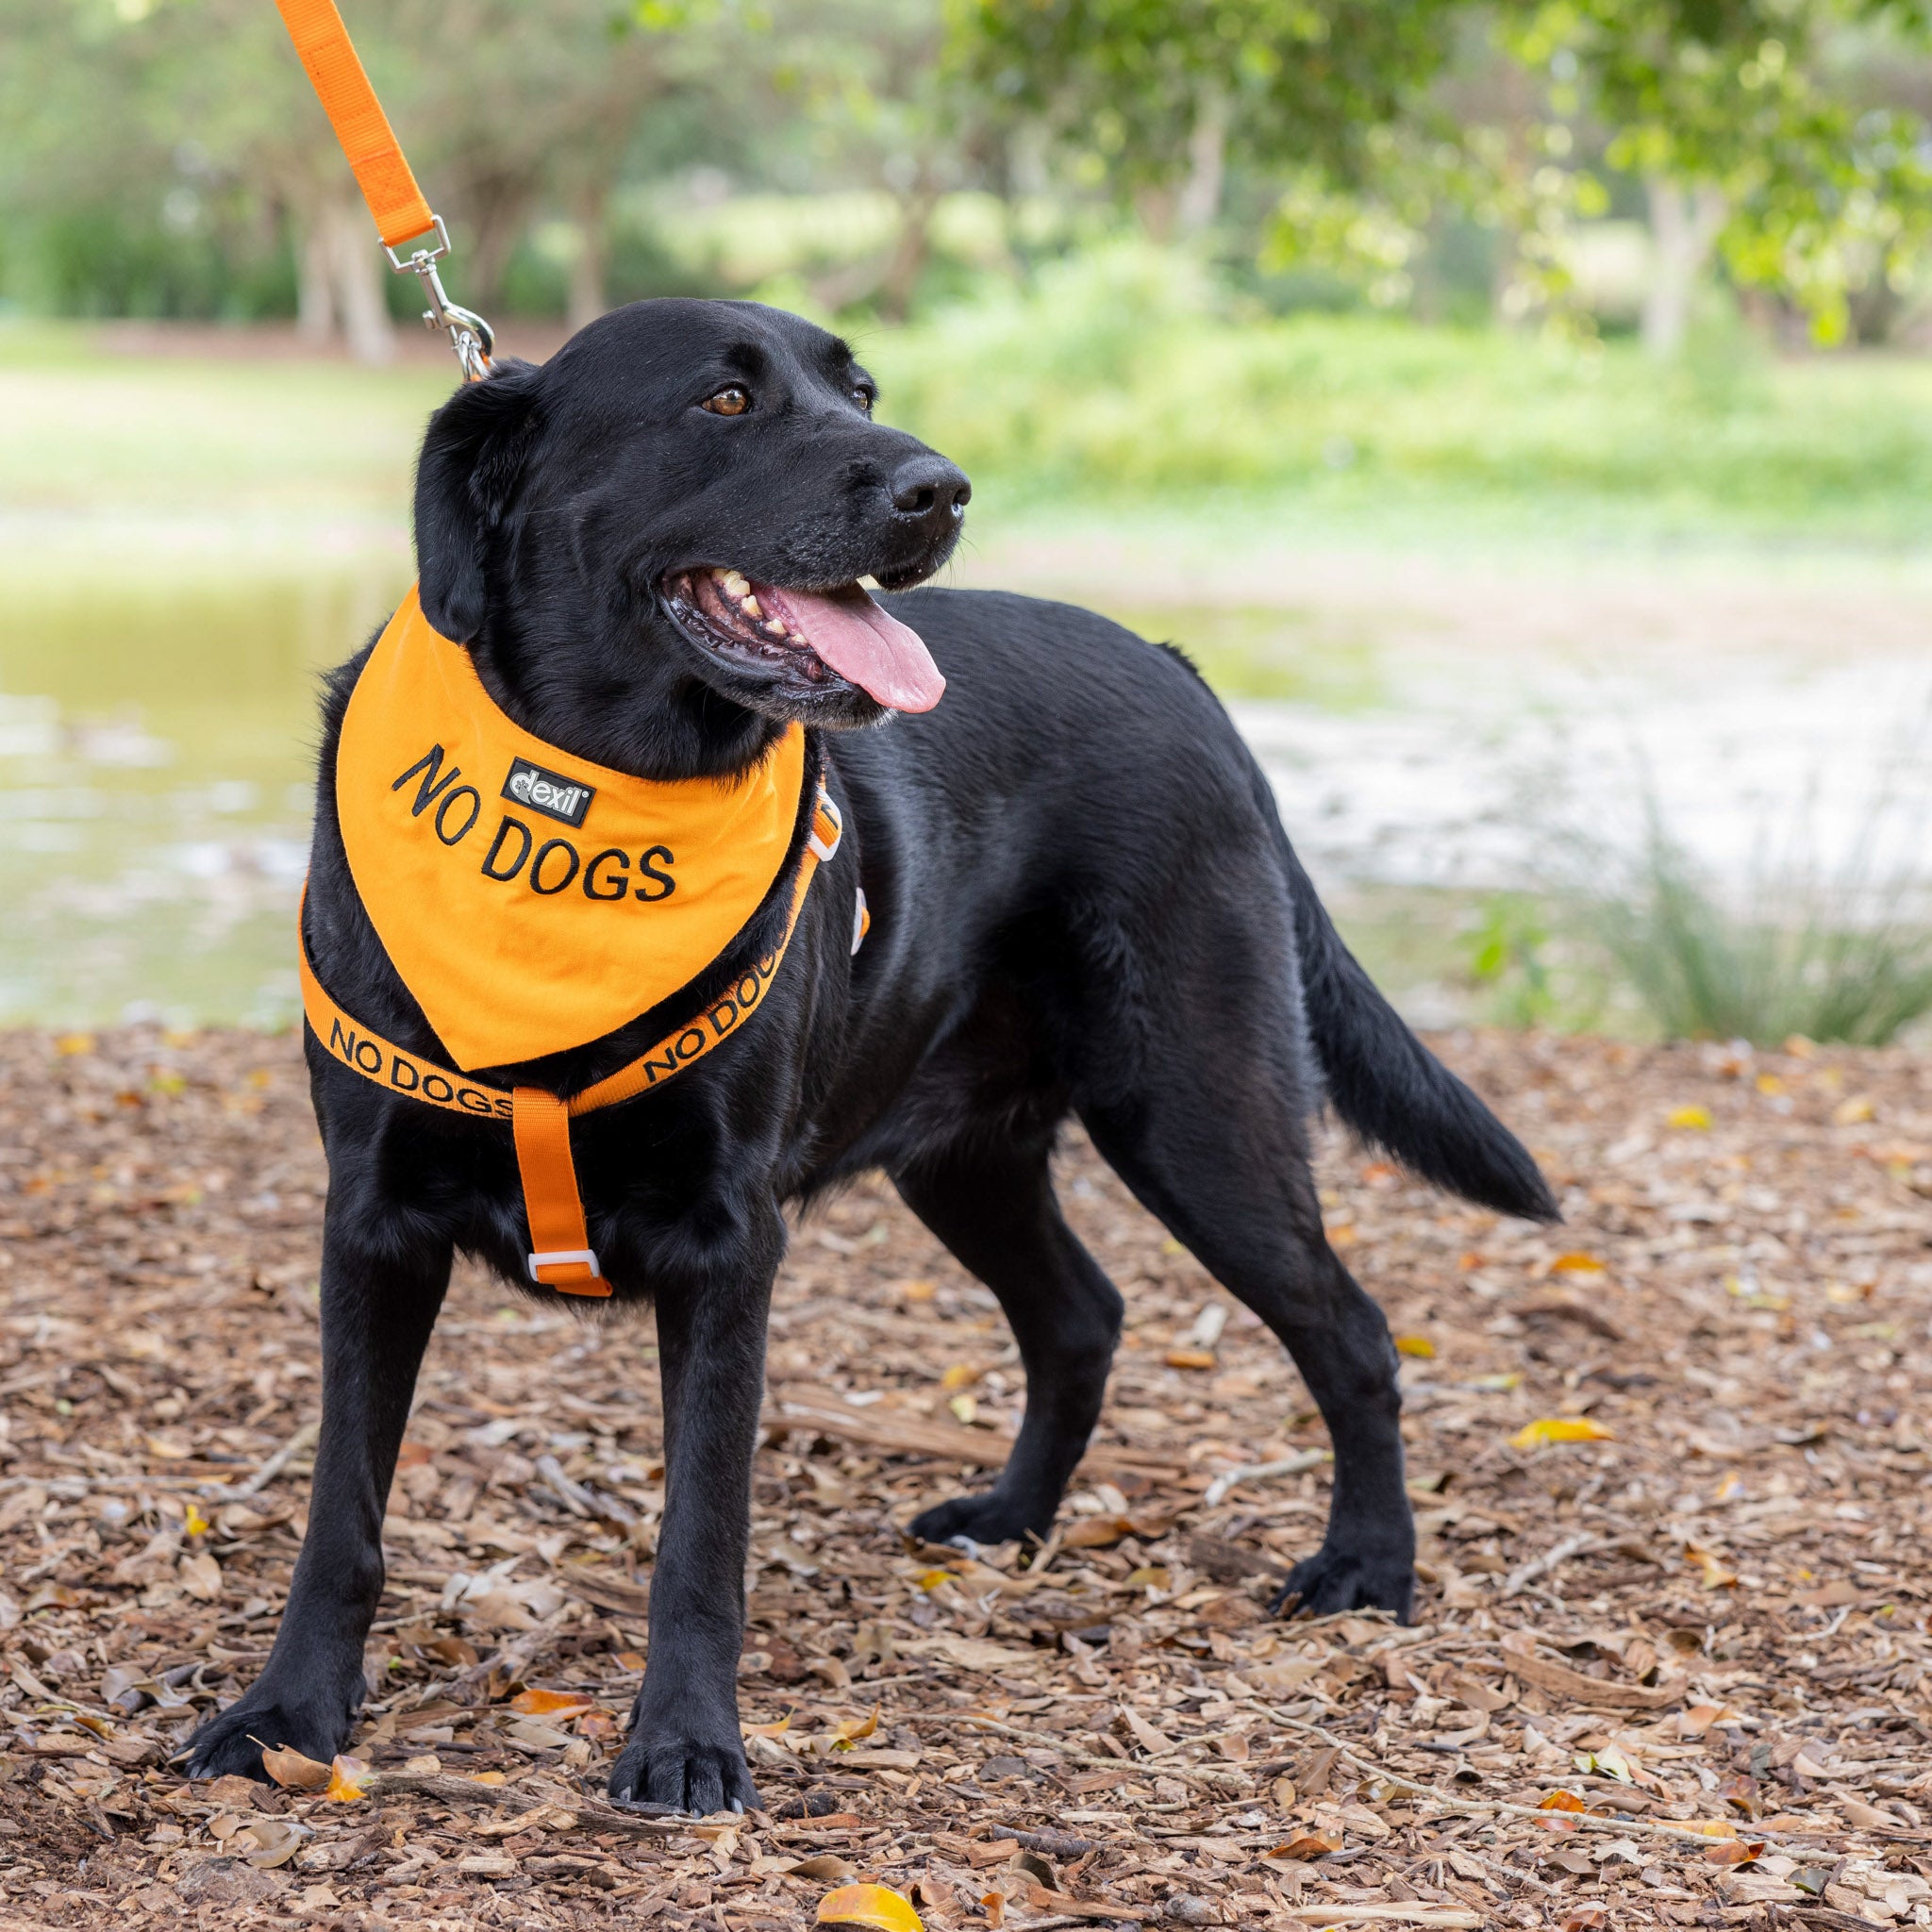 Dexil Friendly Dog Collars orange NO DOGS Dog Bandana